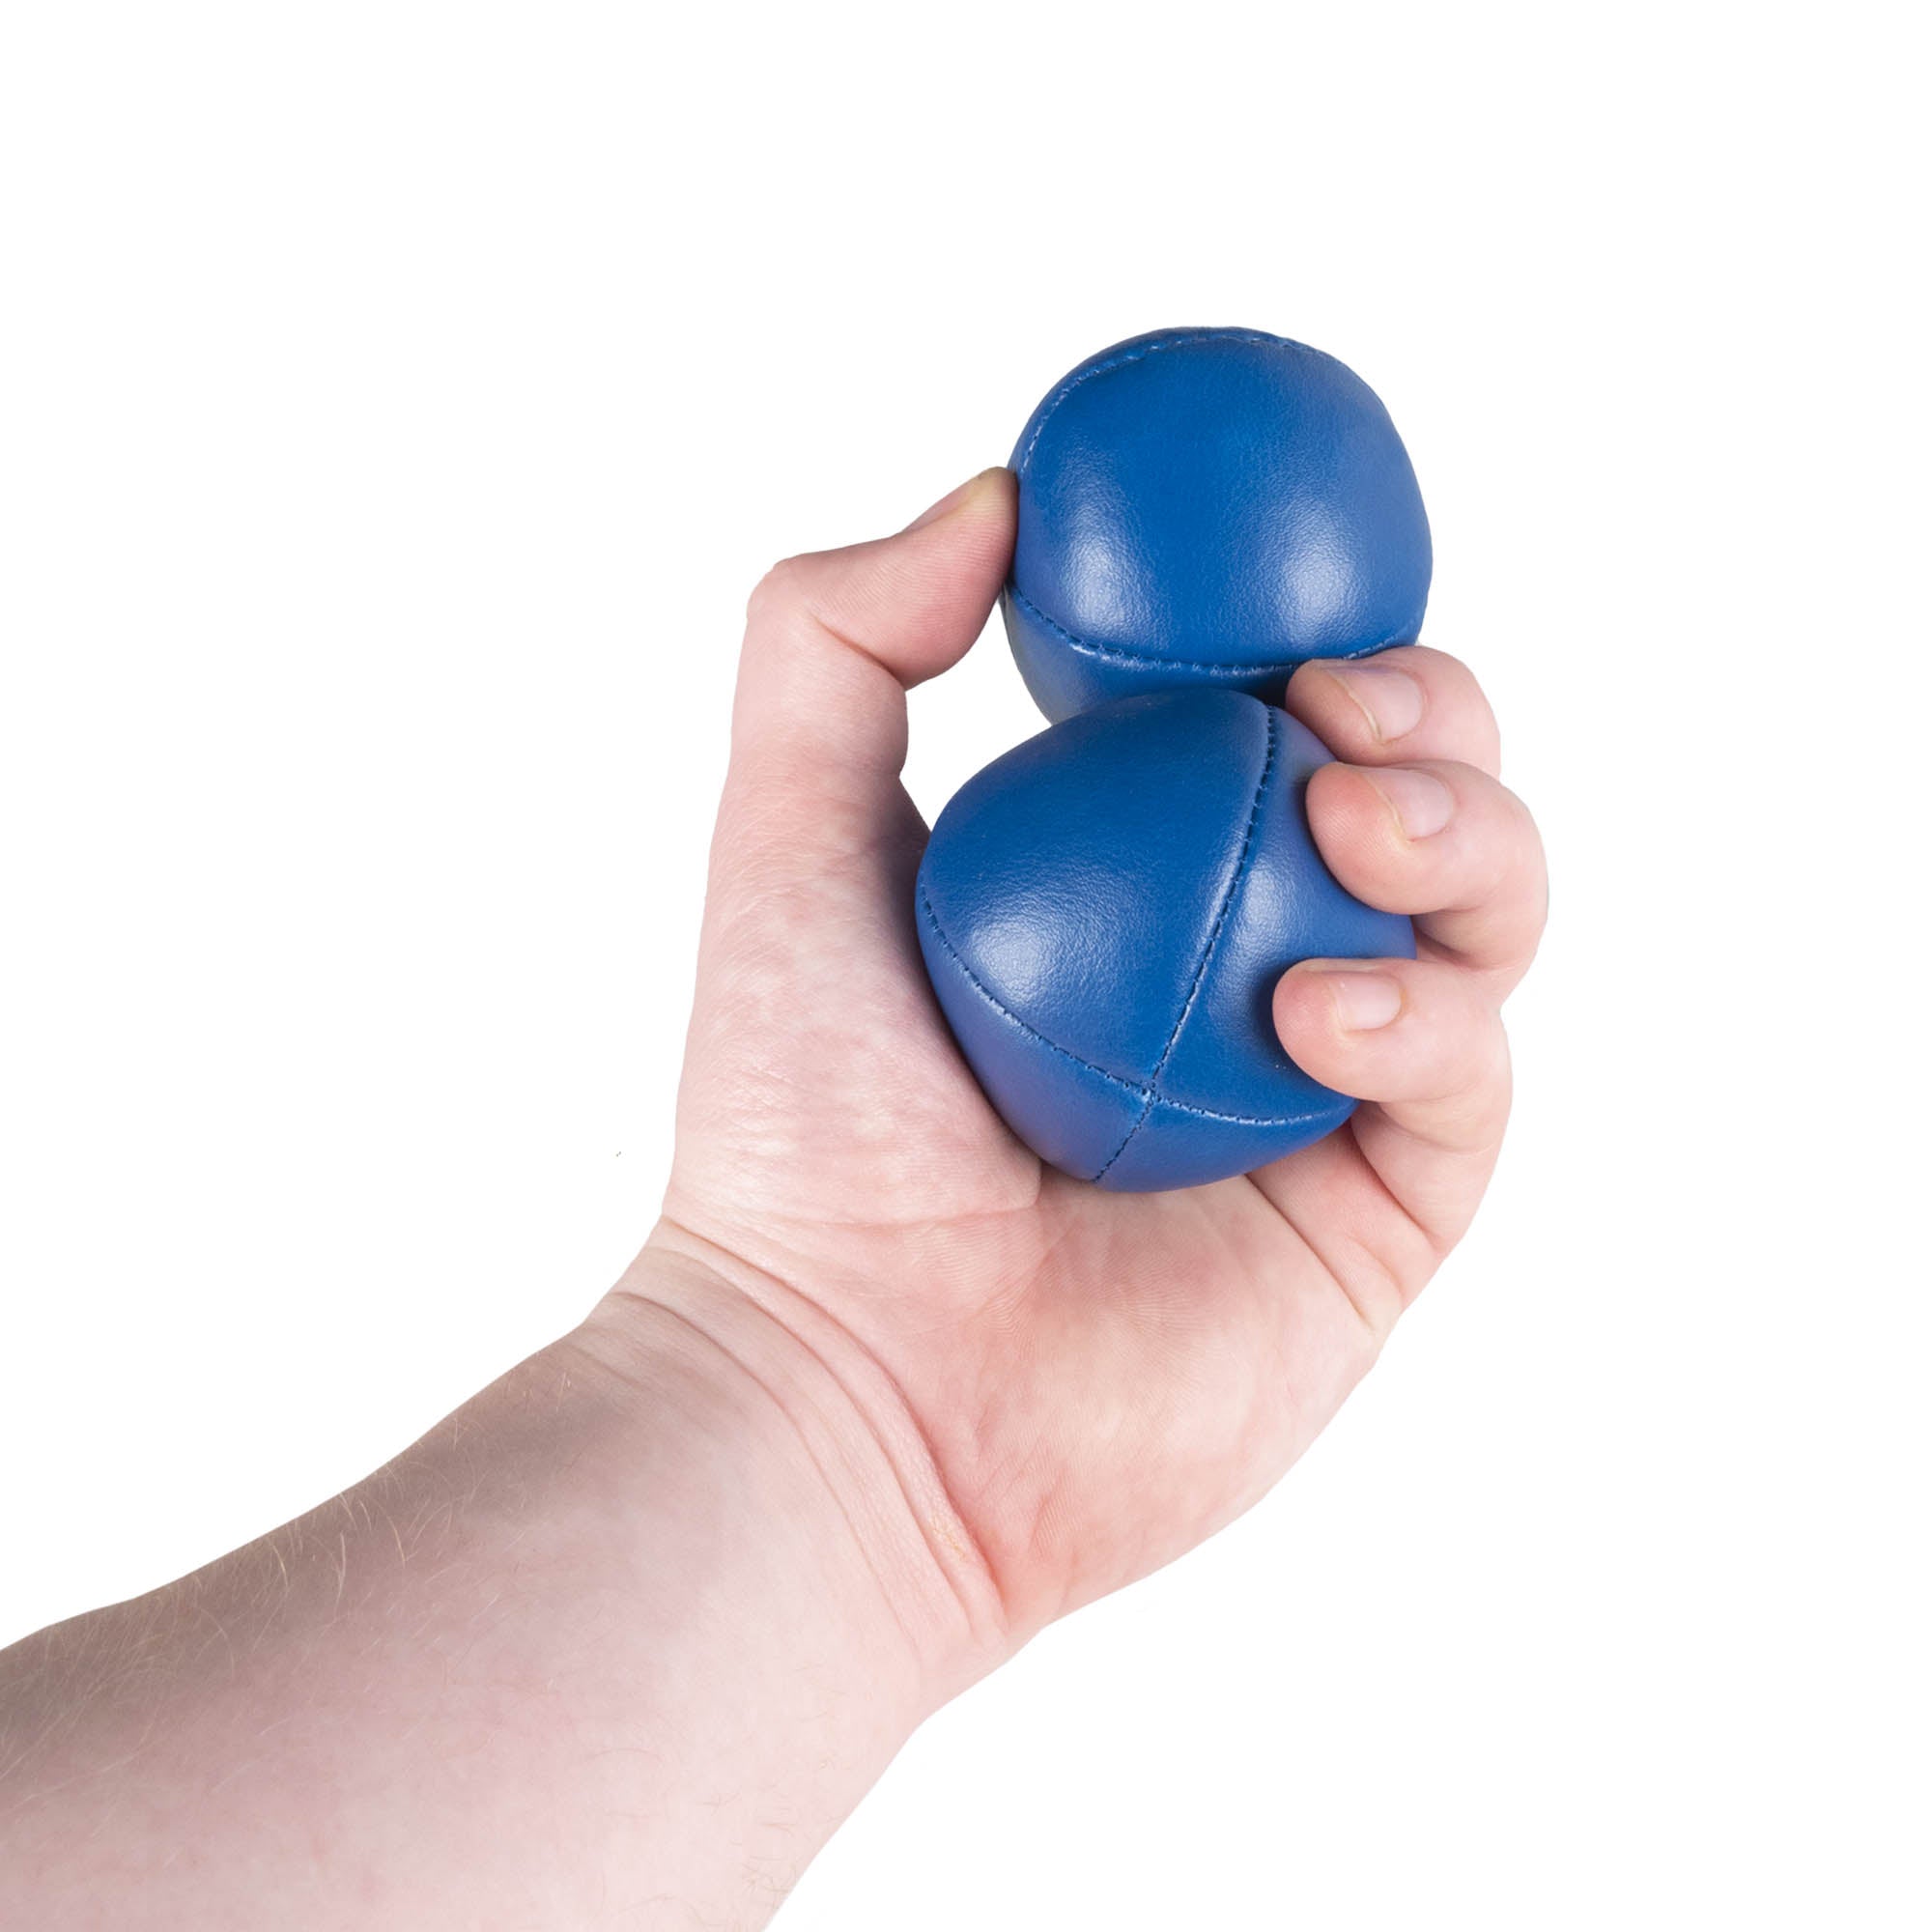 2 blue balls in hand